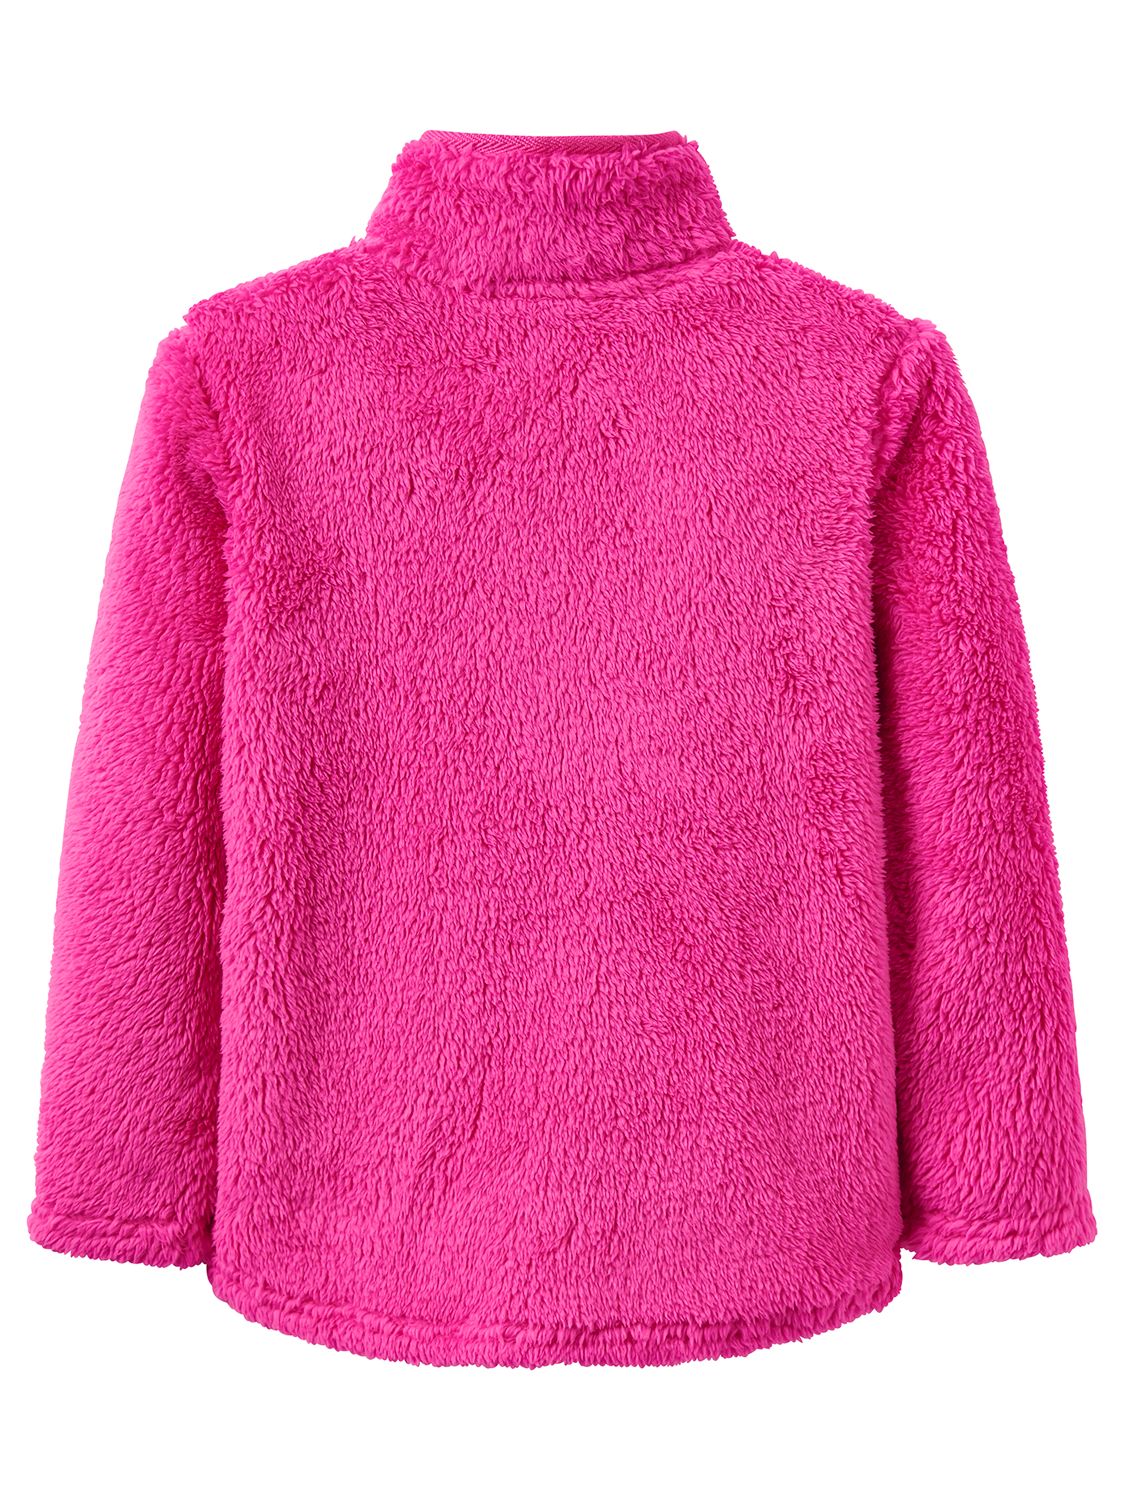 Little Joule Girls' Fluffy Half Zip Fleece, Pink